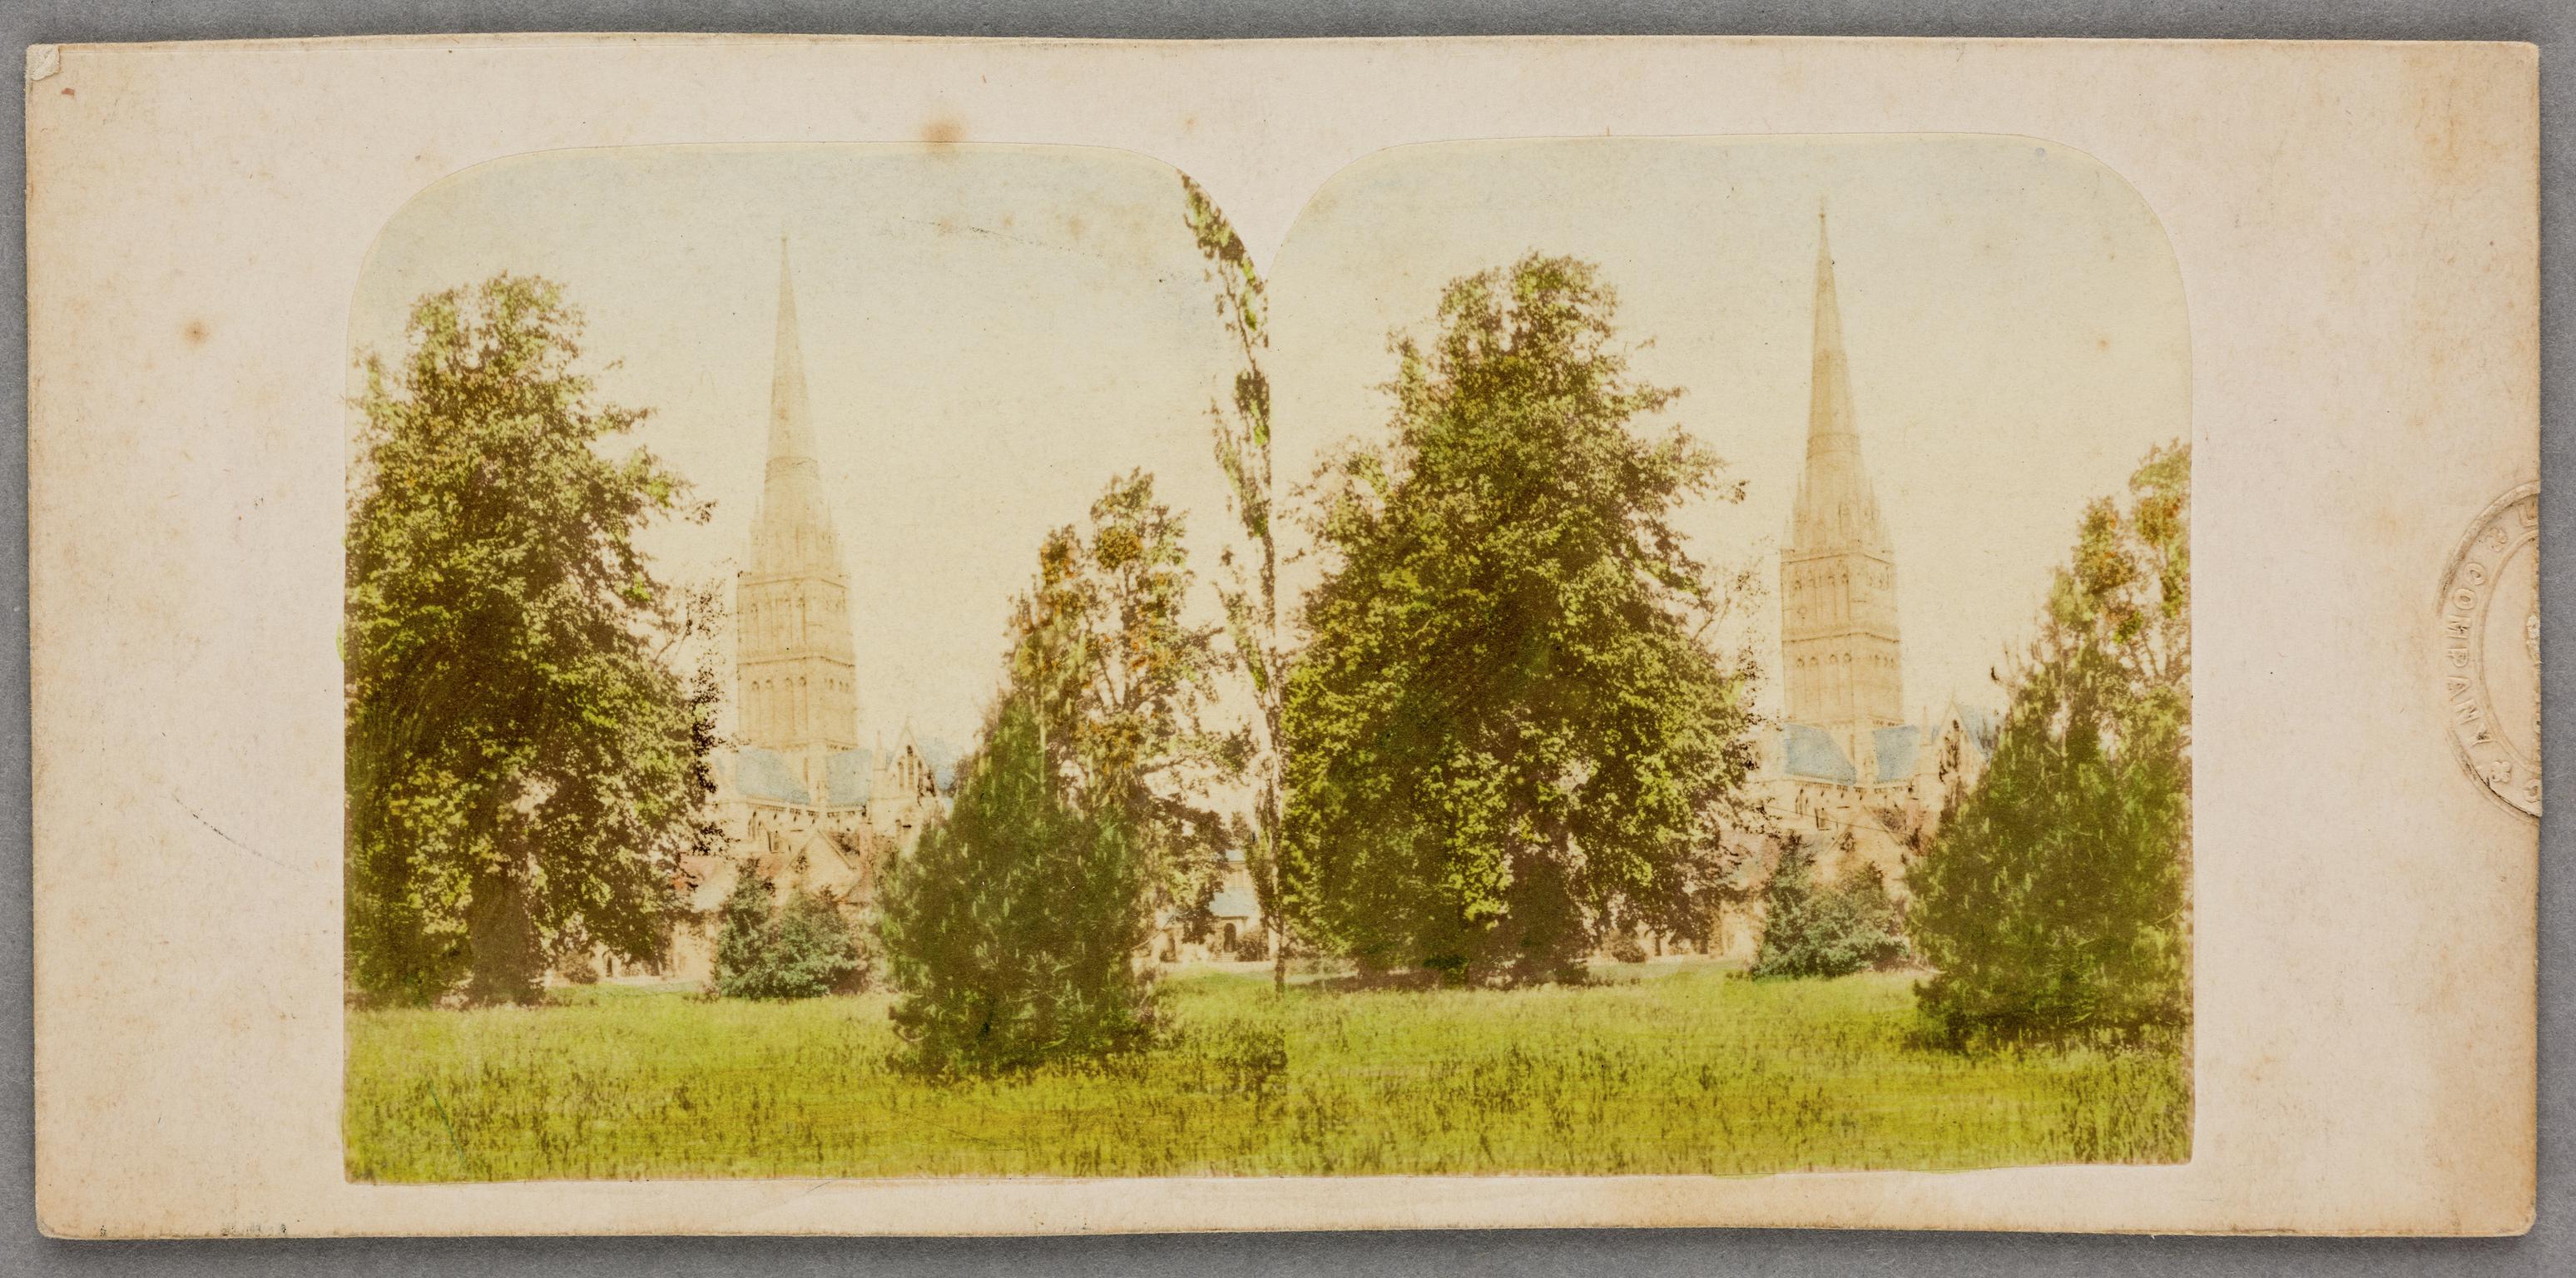 Salisbury, photograph